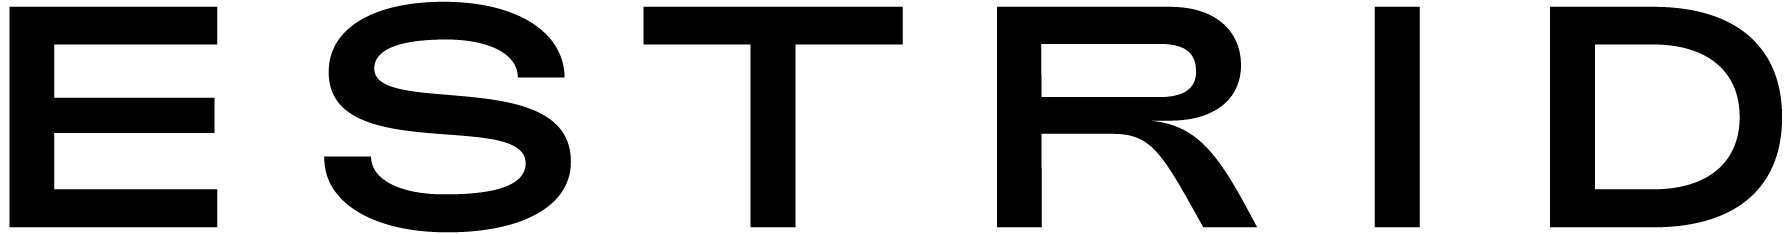 Estrid logo